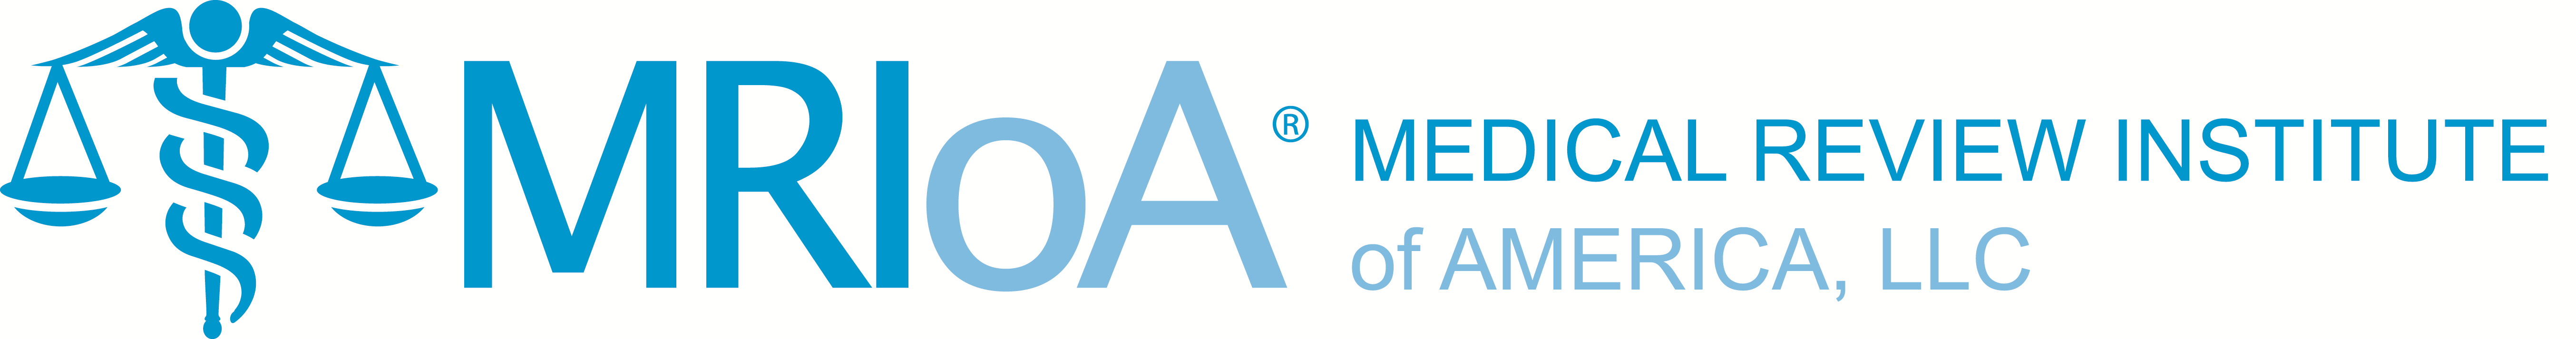 Medical Review Institute of America, LLC logo